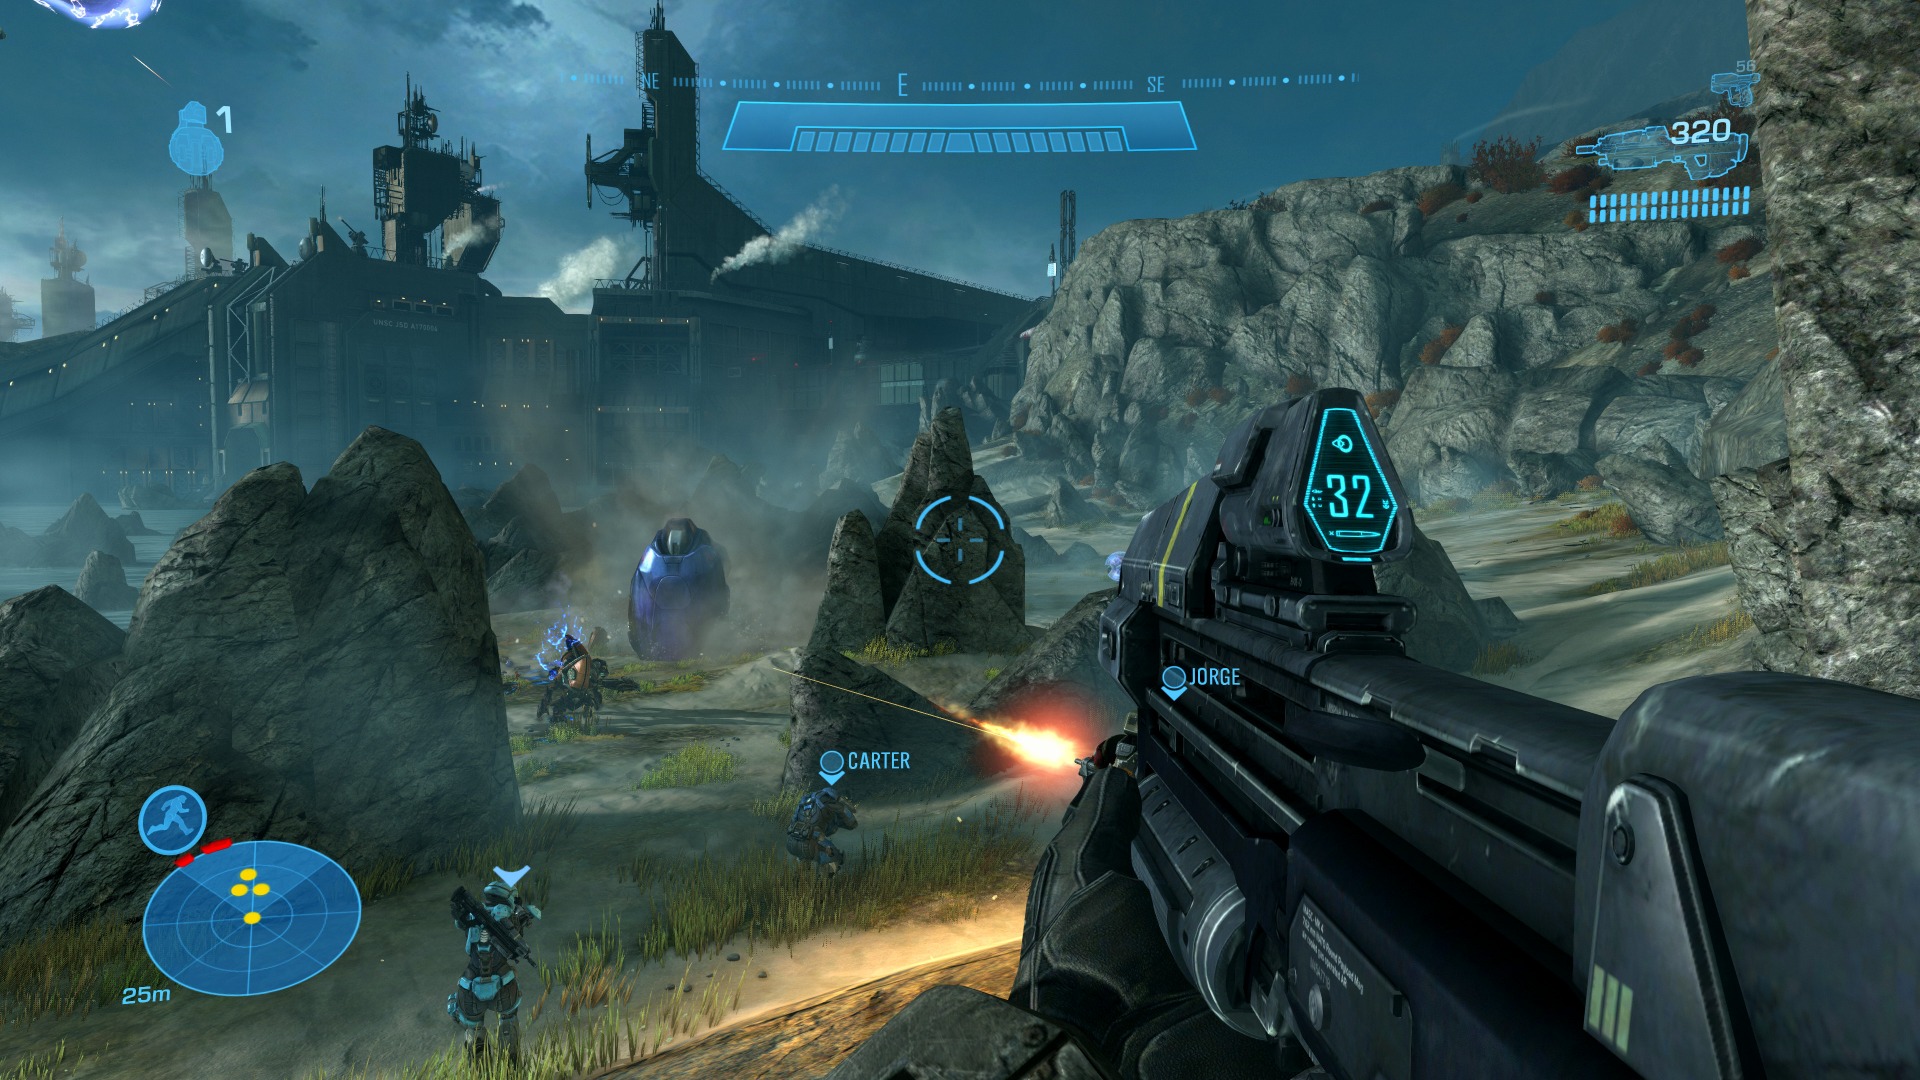 Pc Xbox One版 Halo Reach がついに発売 Steamでは同時接続数が15万人を超え Counter Strike Global Offensive と Dota 2 に次ぐ第3位に 2019年12月4日 Biglobeニュース